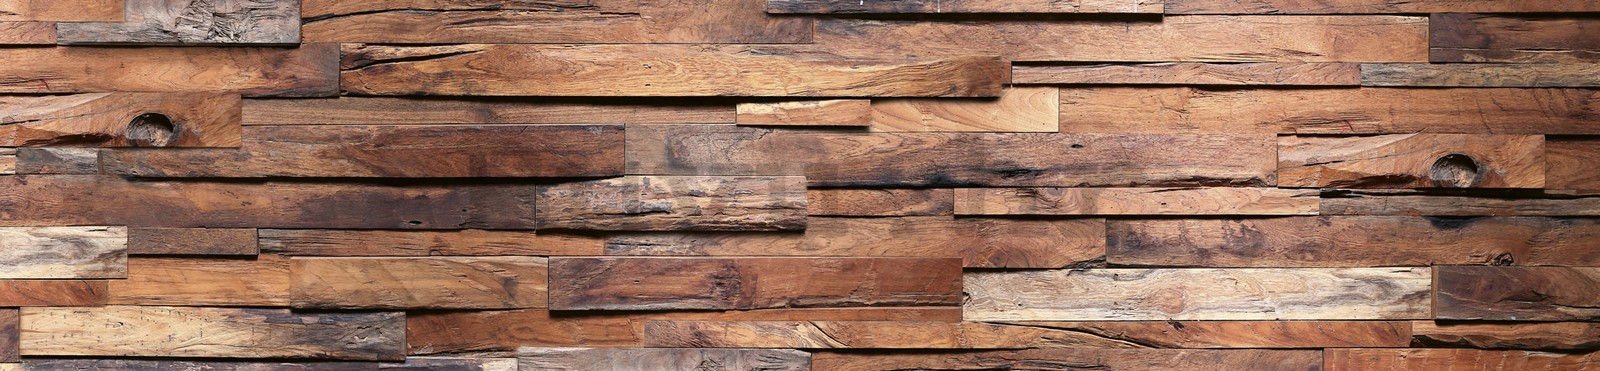 Samoljepljiva periva tapeta za kuhinju - Drveni zid, 260x60 cm